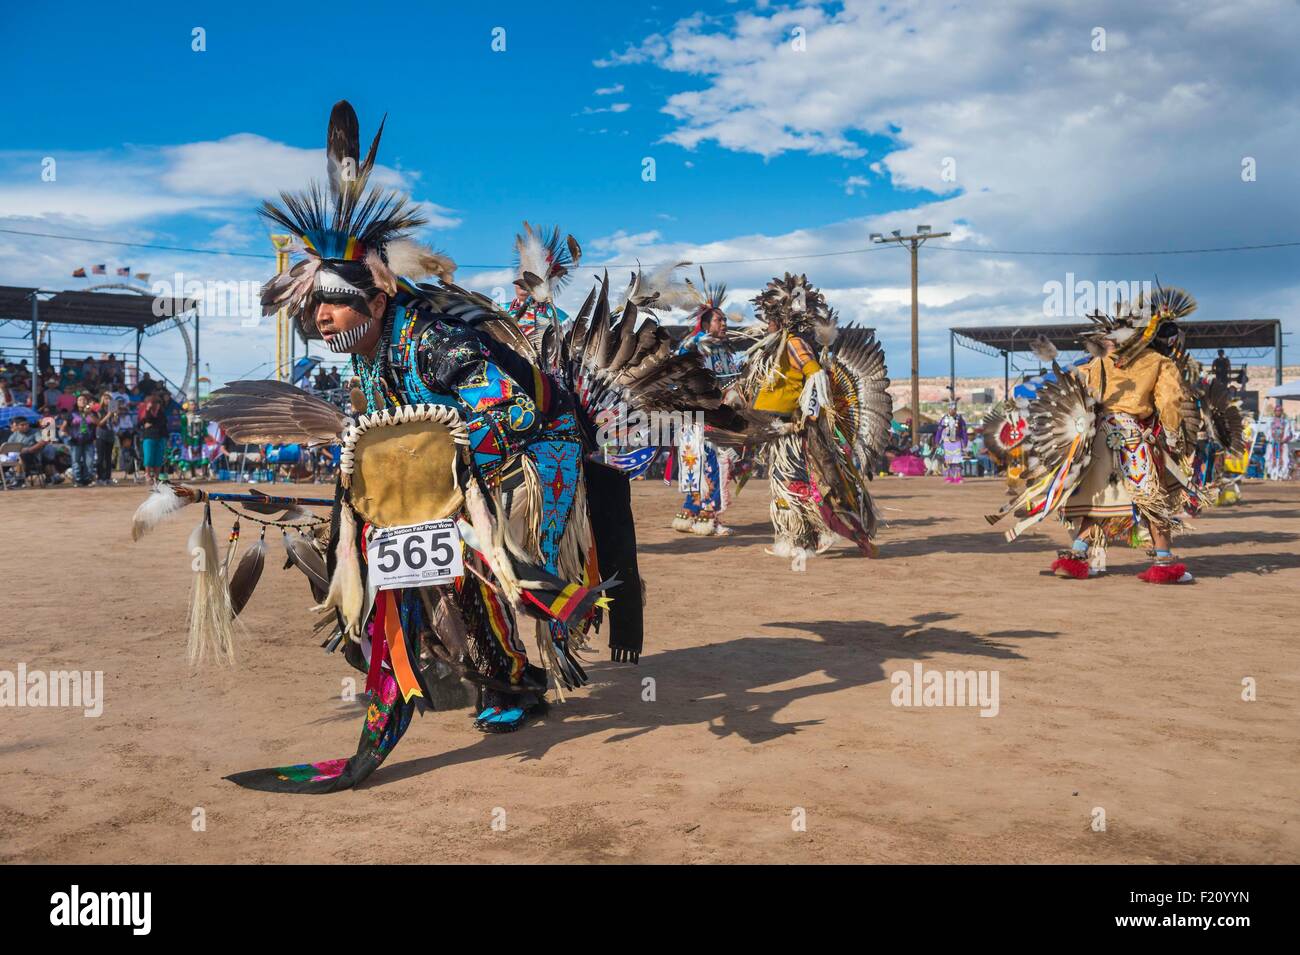 United States, Arizona, Window Rock, Festival Navajo Nation Fair